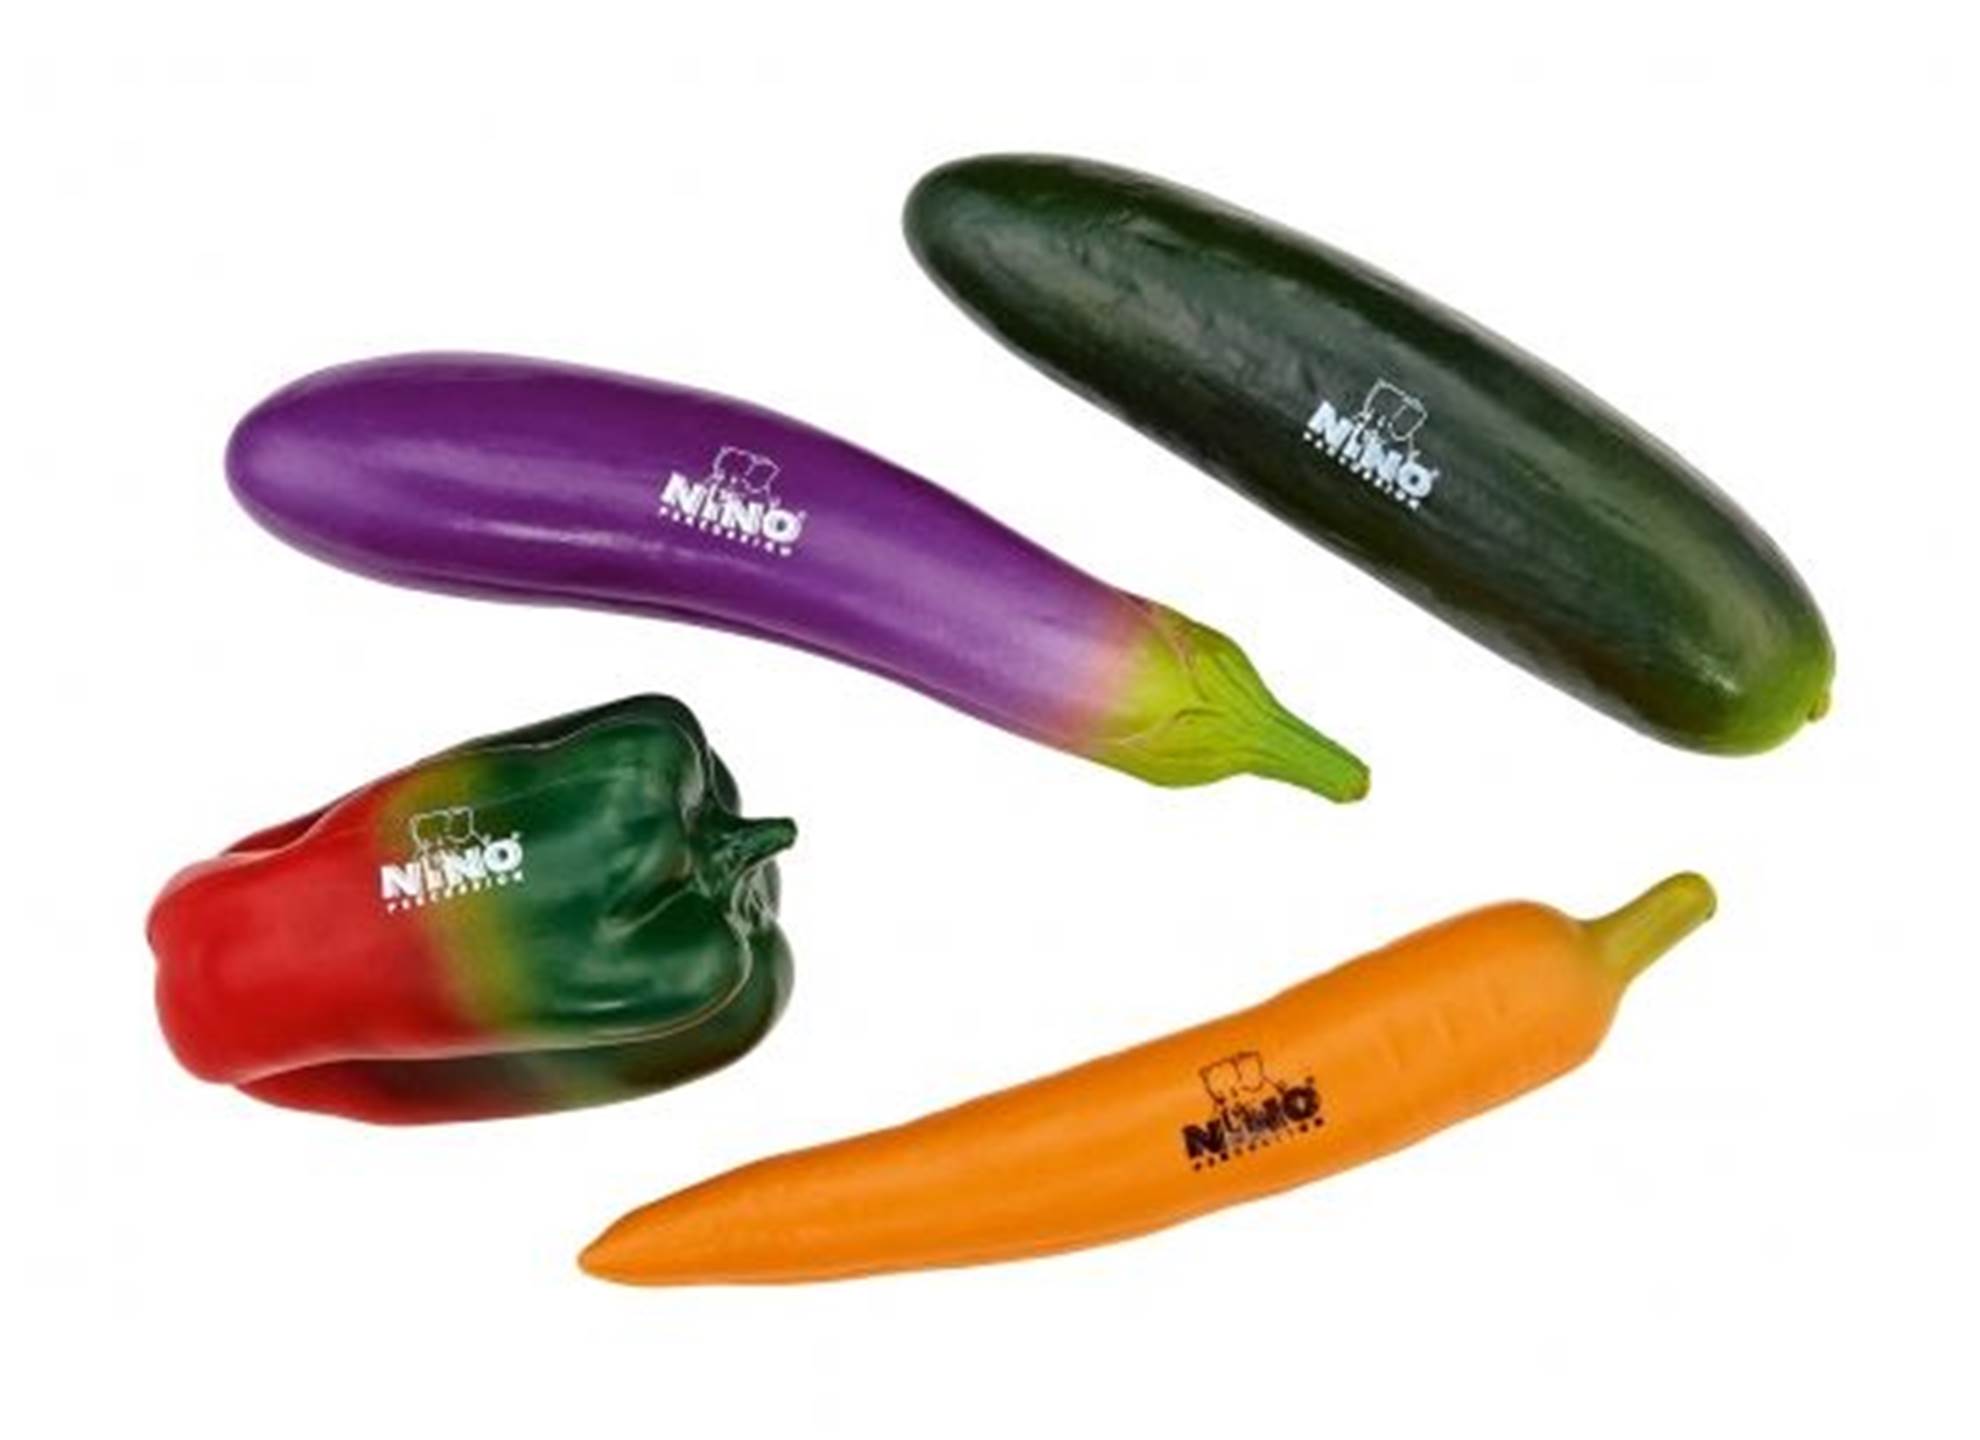 NINOSET101 Vegetable shaker set